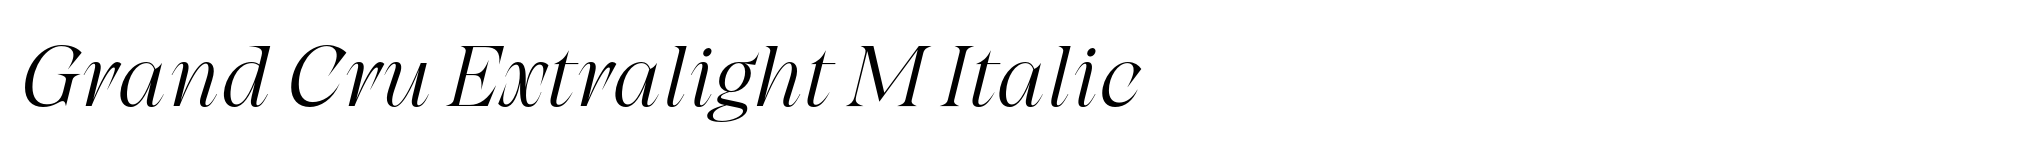 Grand Cru Extralight M Italic image